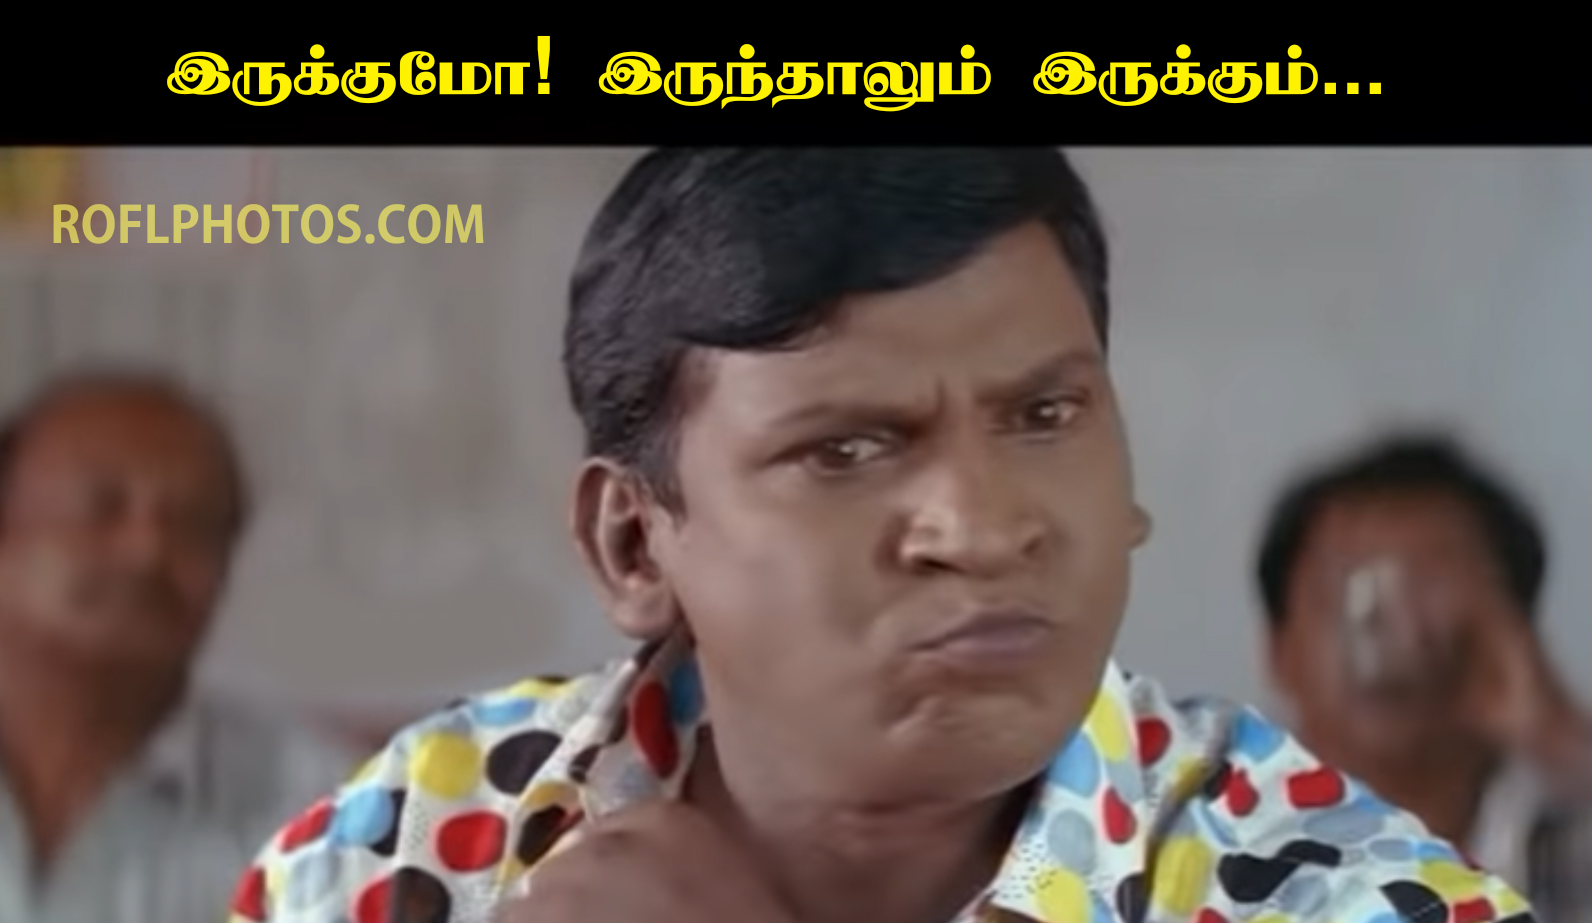 Tamil Comedy Memes: Vadivelu Memes Images | Vadivelu ...